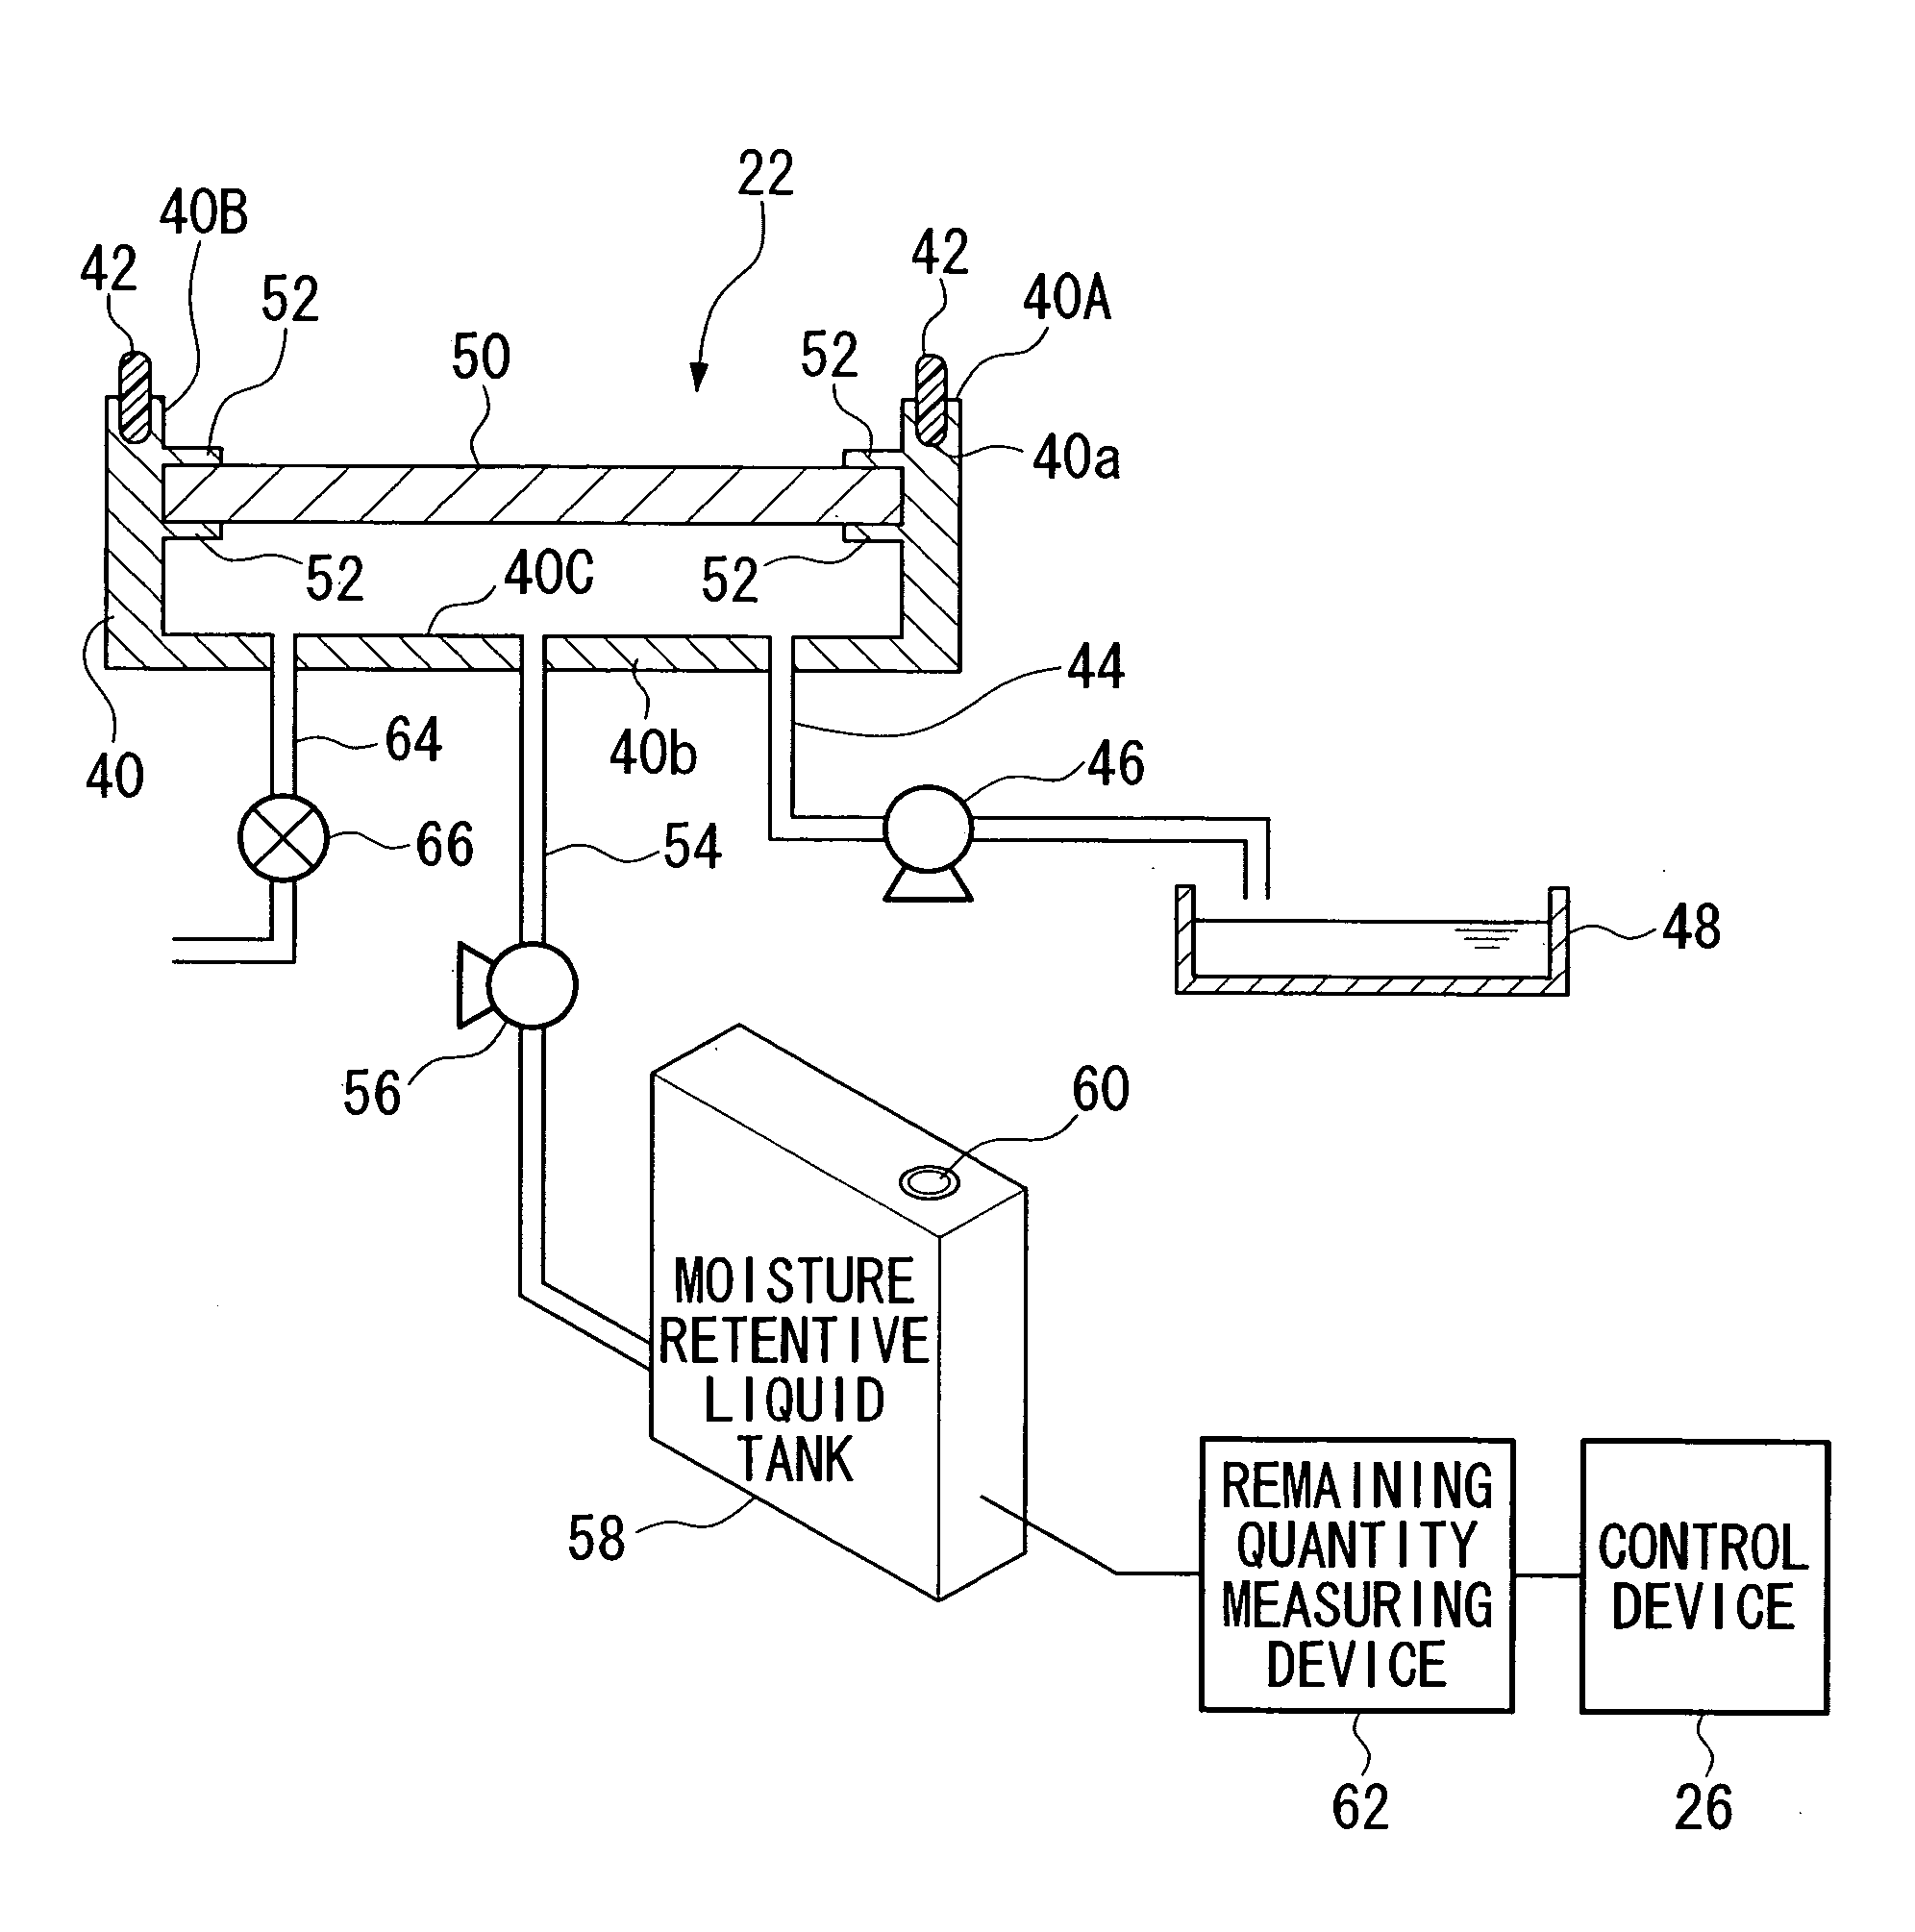 Droplet jetting apparatus, method of operating droplet jetting apparatus, and device manufacturing method